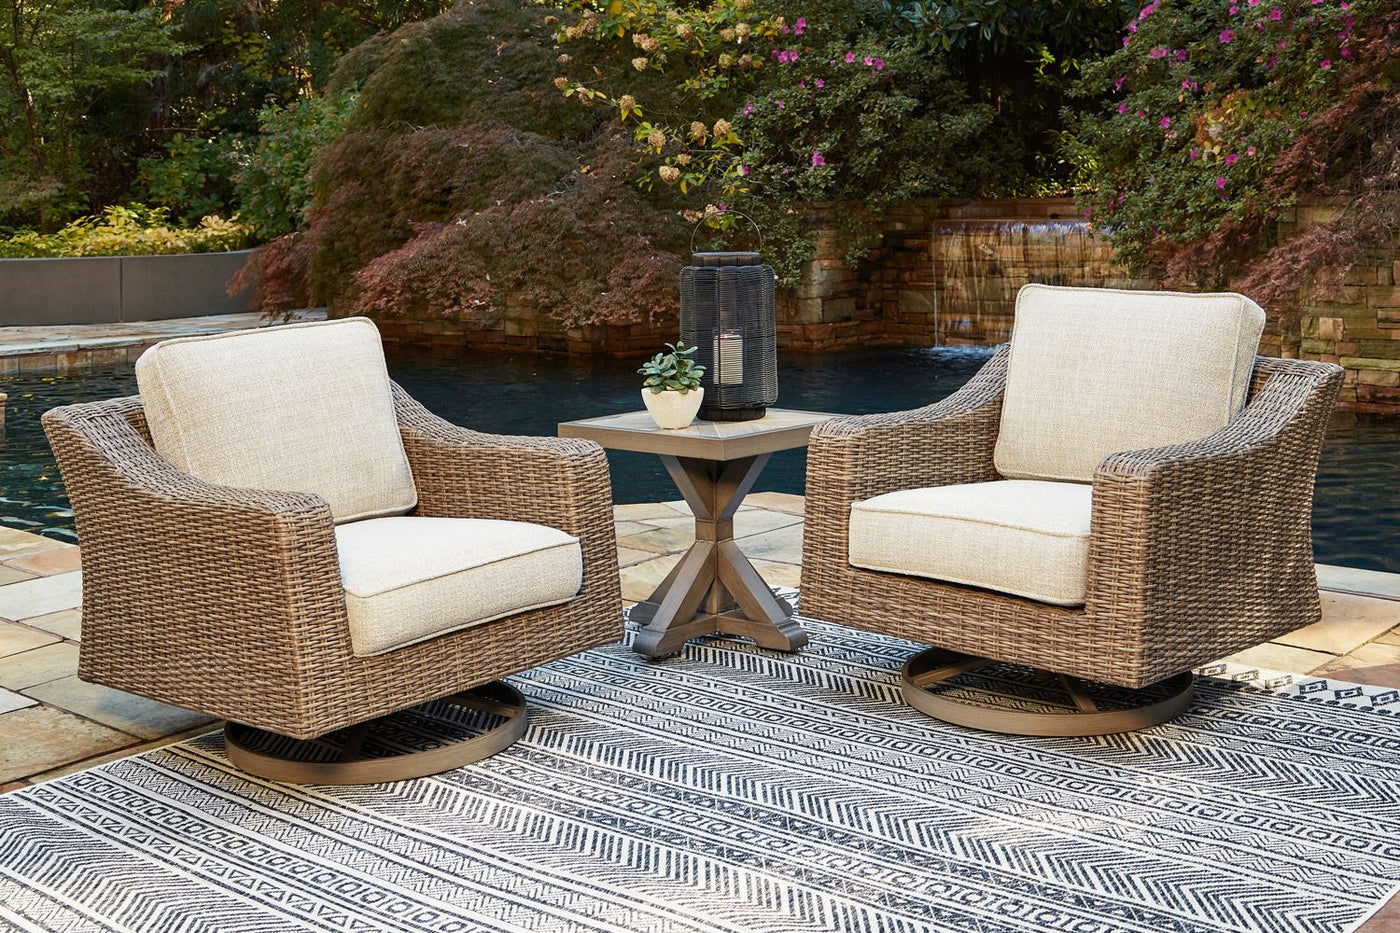 Beachcroft - Outdoor Swivel Chair - Beige, Brown